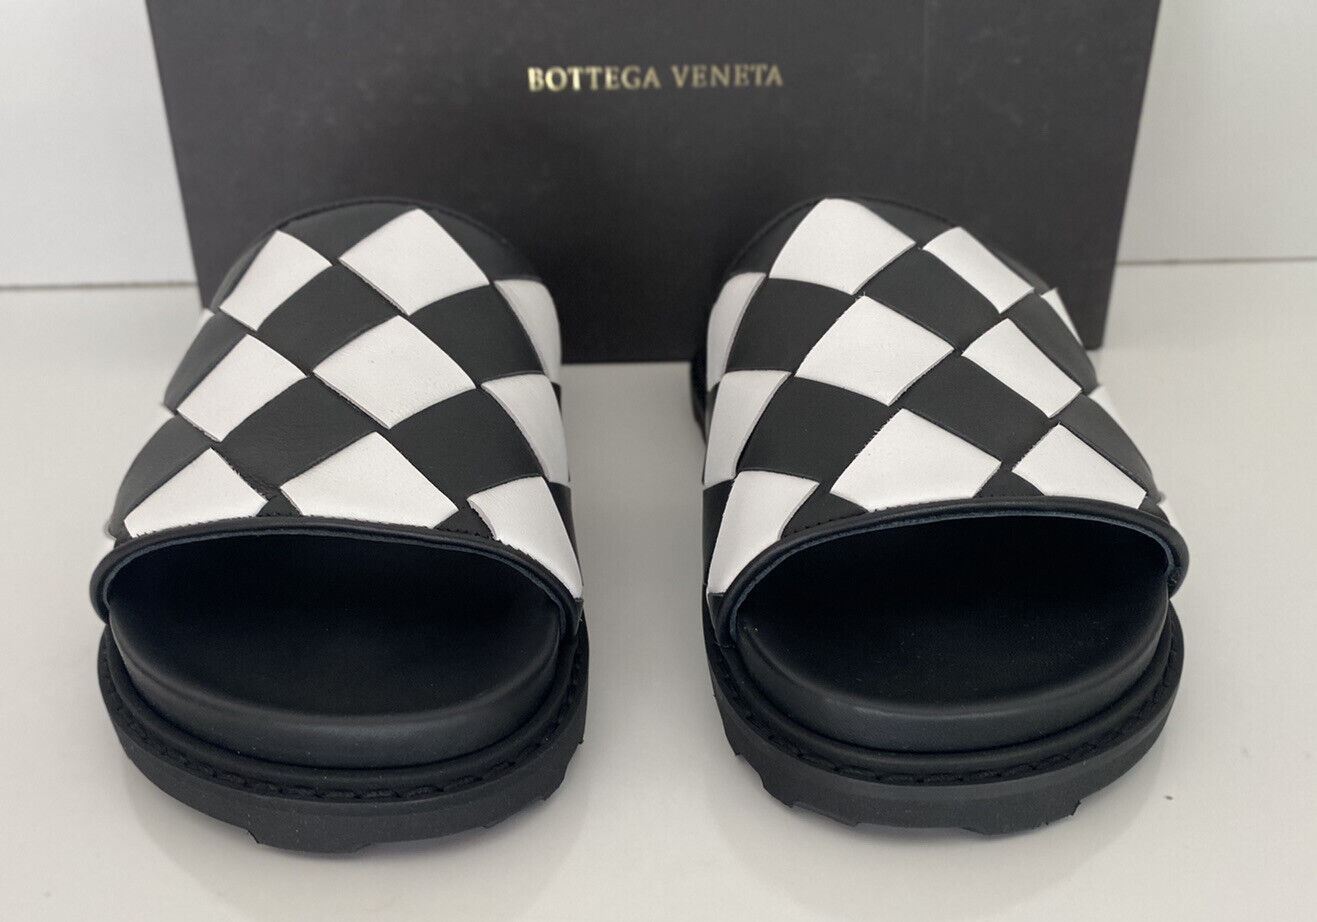 NIB $690 Bottega Veneta Men's Intrecciato Black/White Sandals 7 US (40) 578264